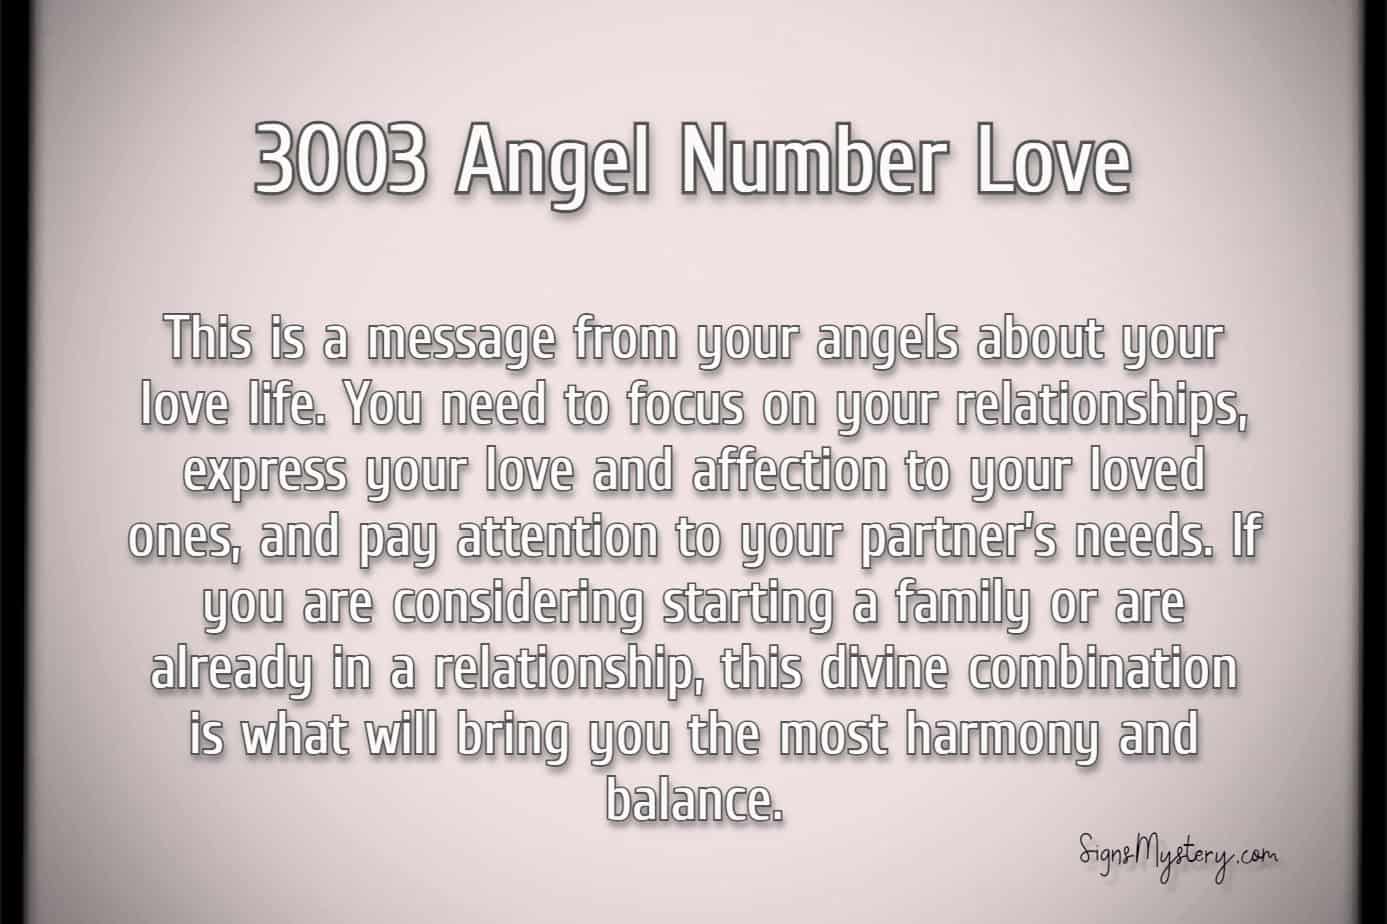 3003 angel number love